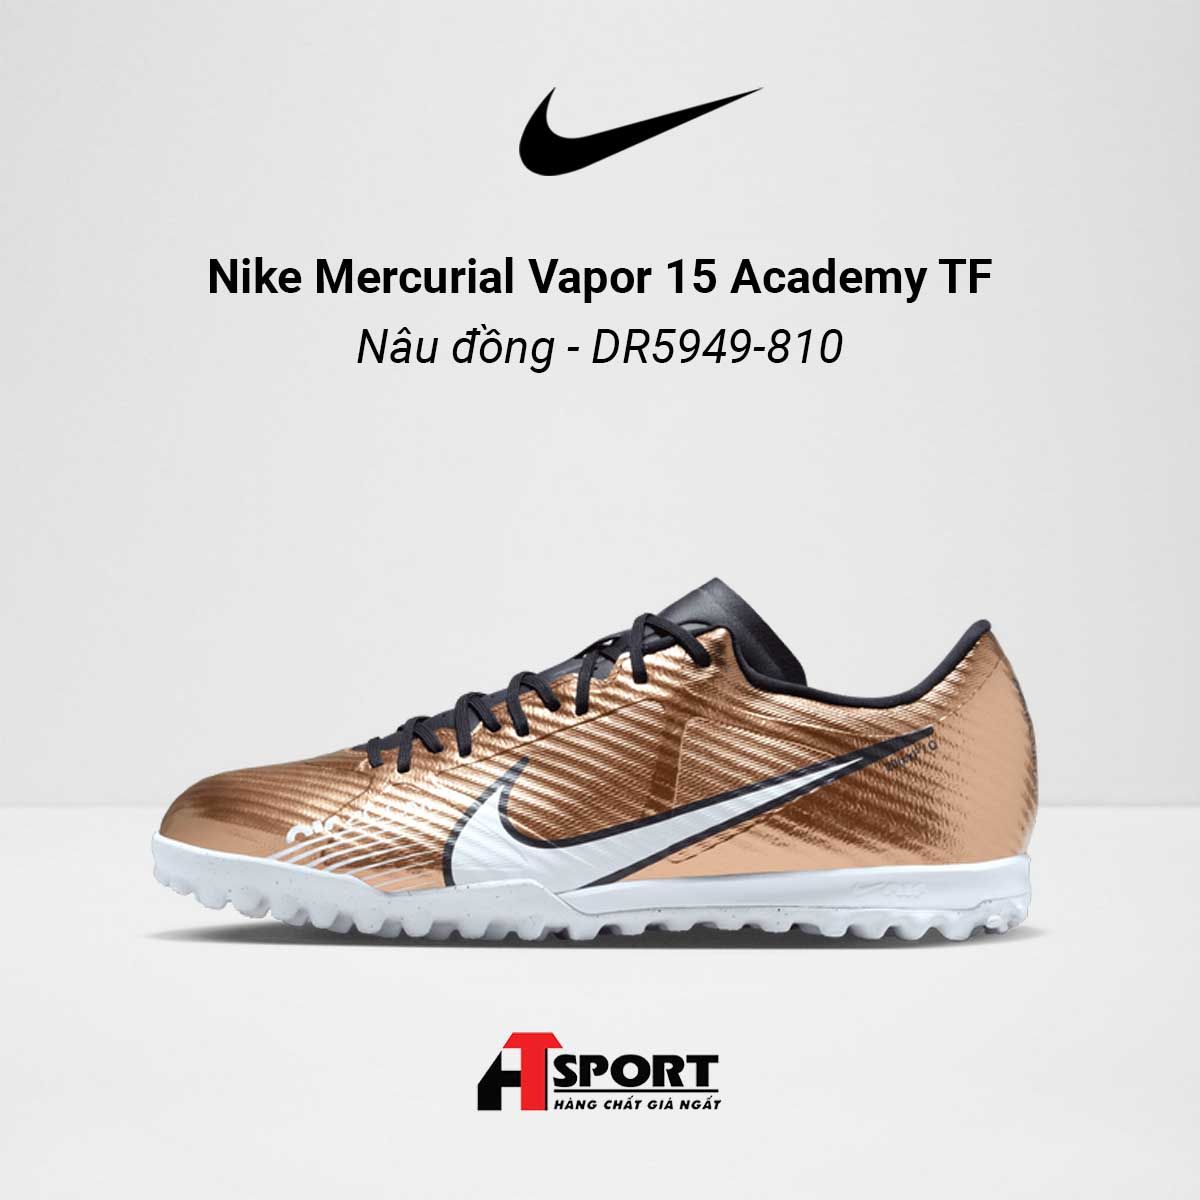  Nike Zoom Mercurial Vapor 15 Nâu đồng Academy TF - DR5949-810 